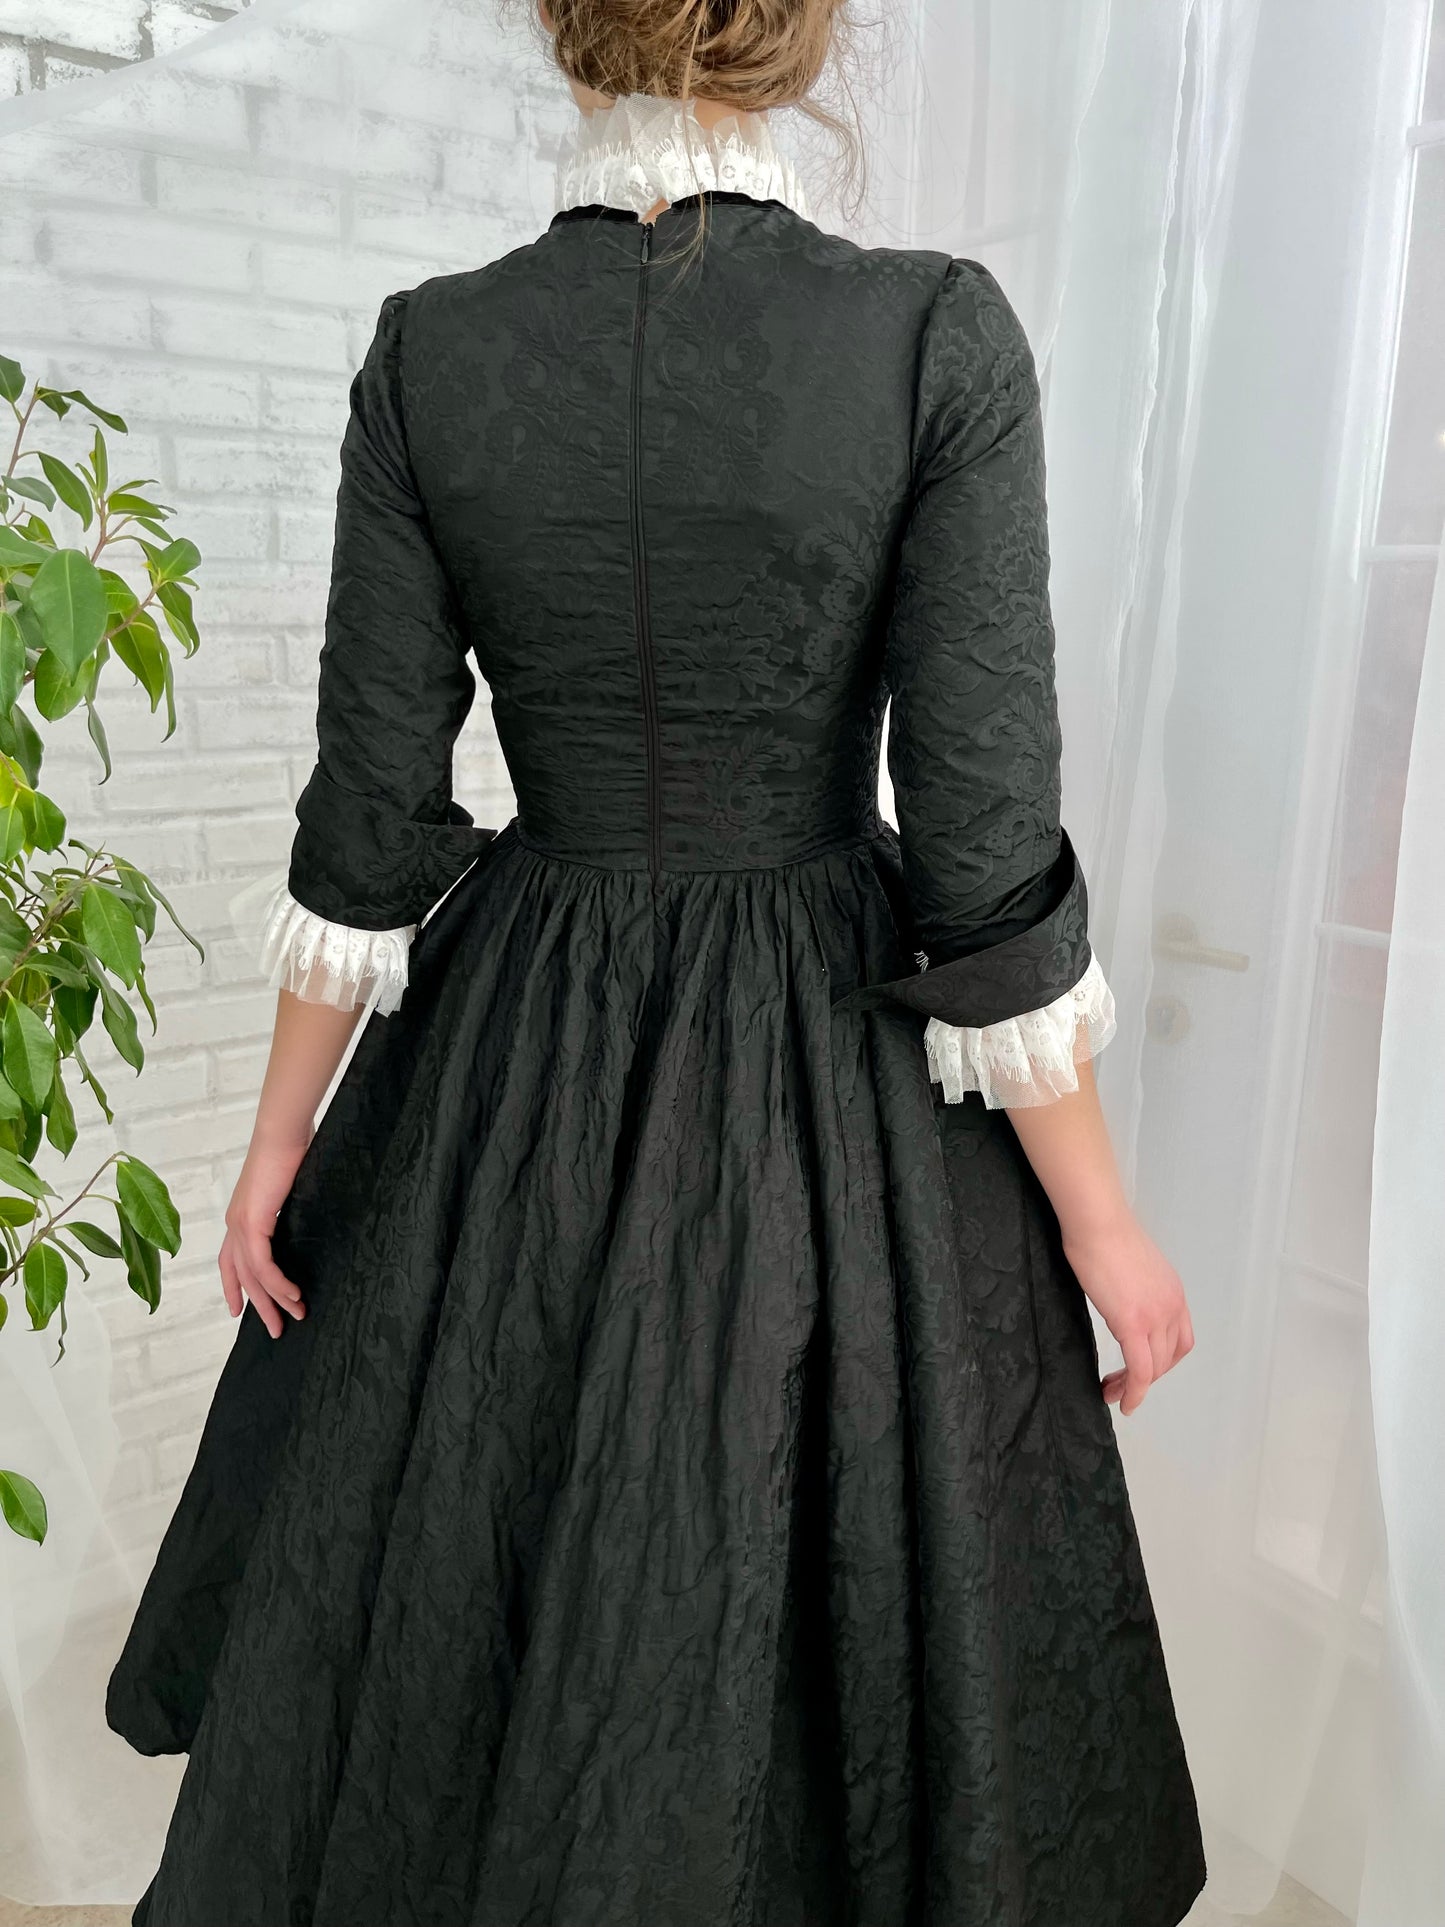 Black midi dress with short sleeves